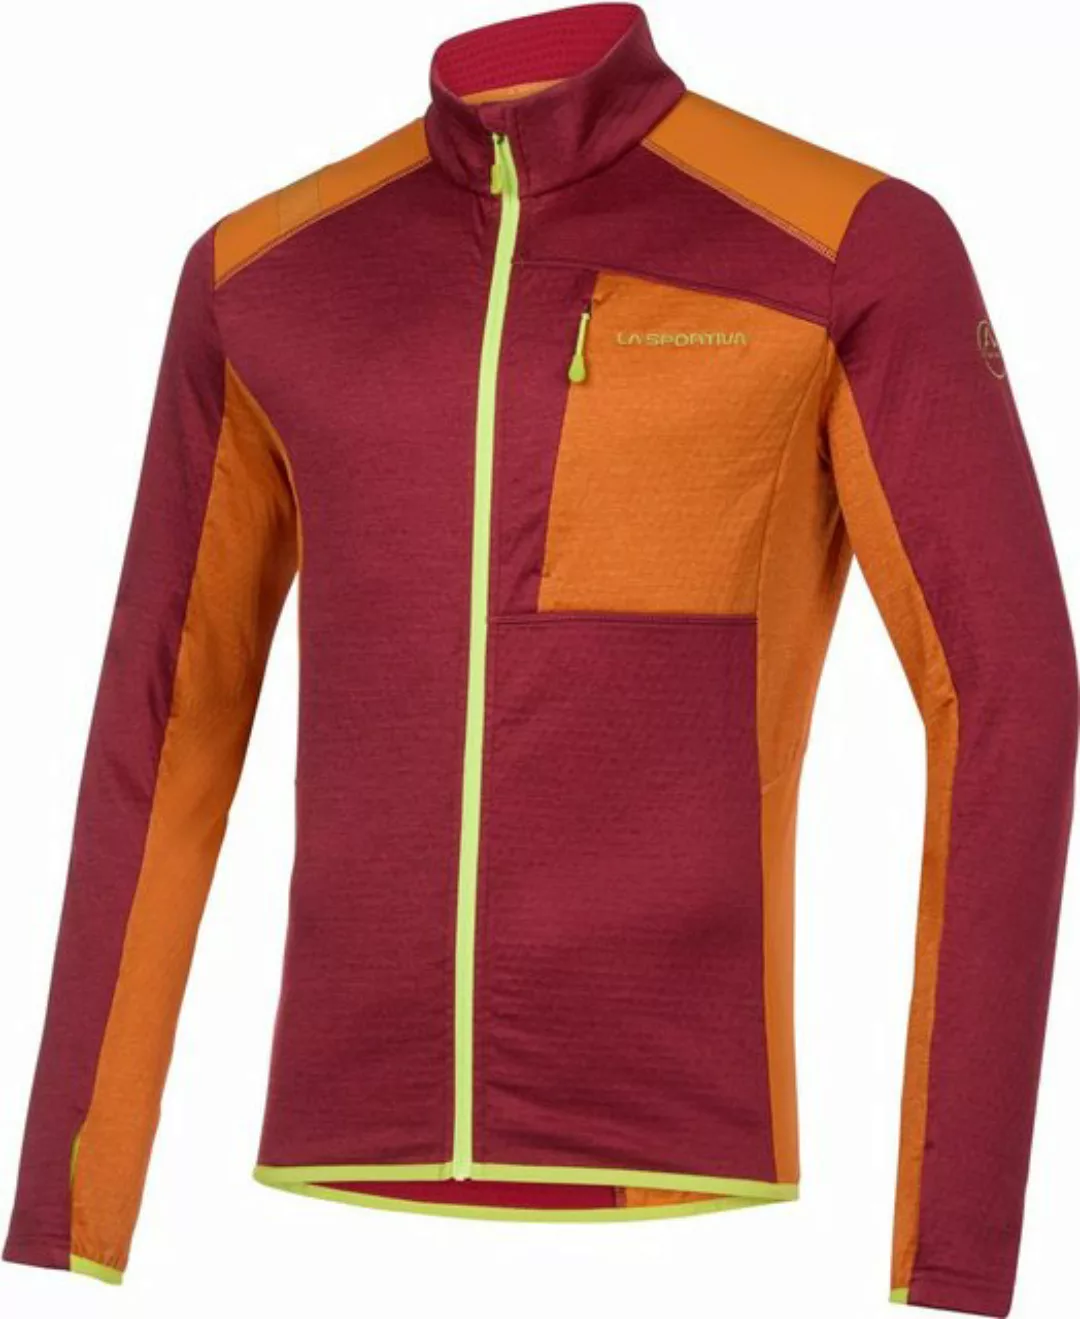 La Sportiva Fleecejacke True North Jacket günstig online kaufen